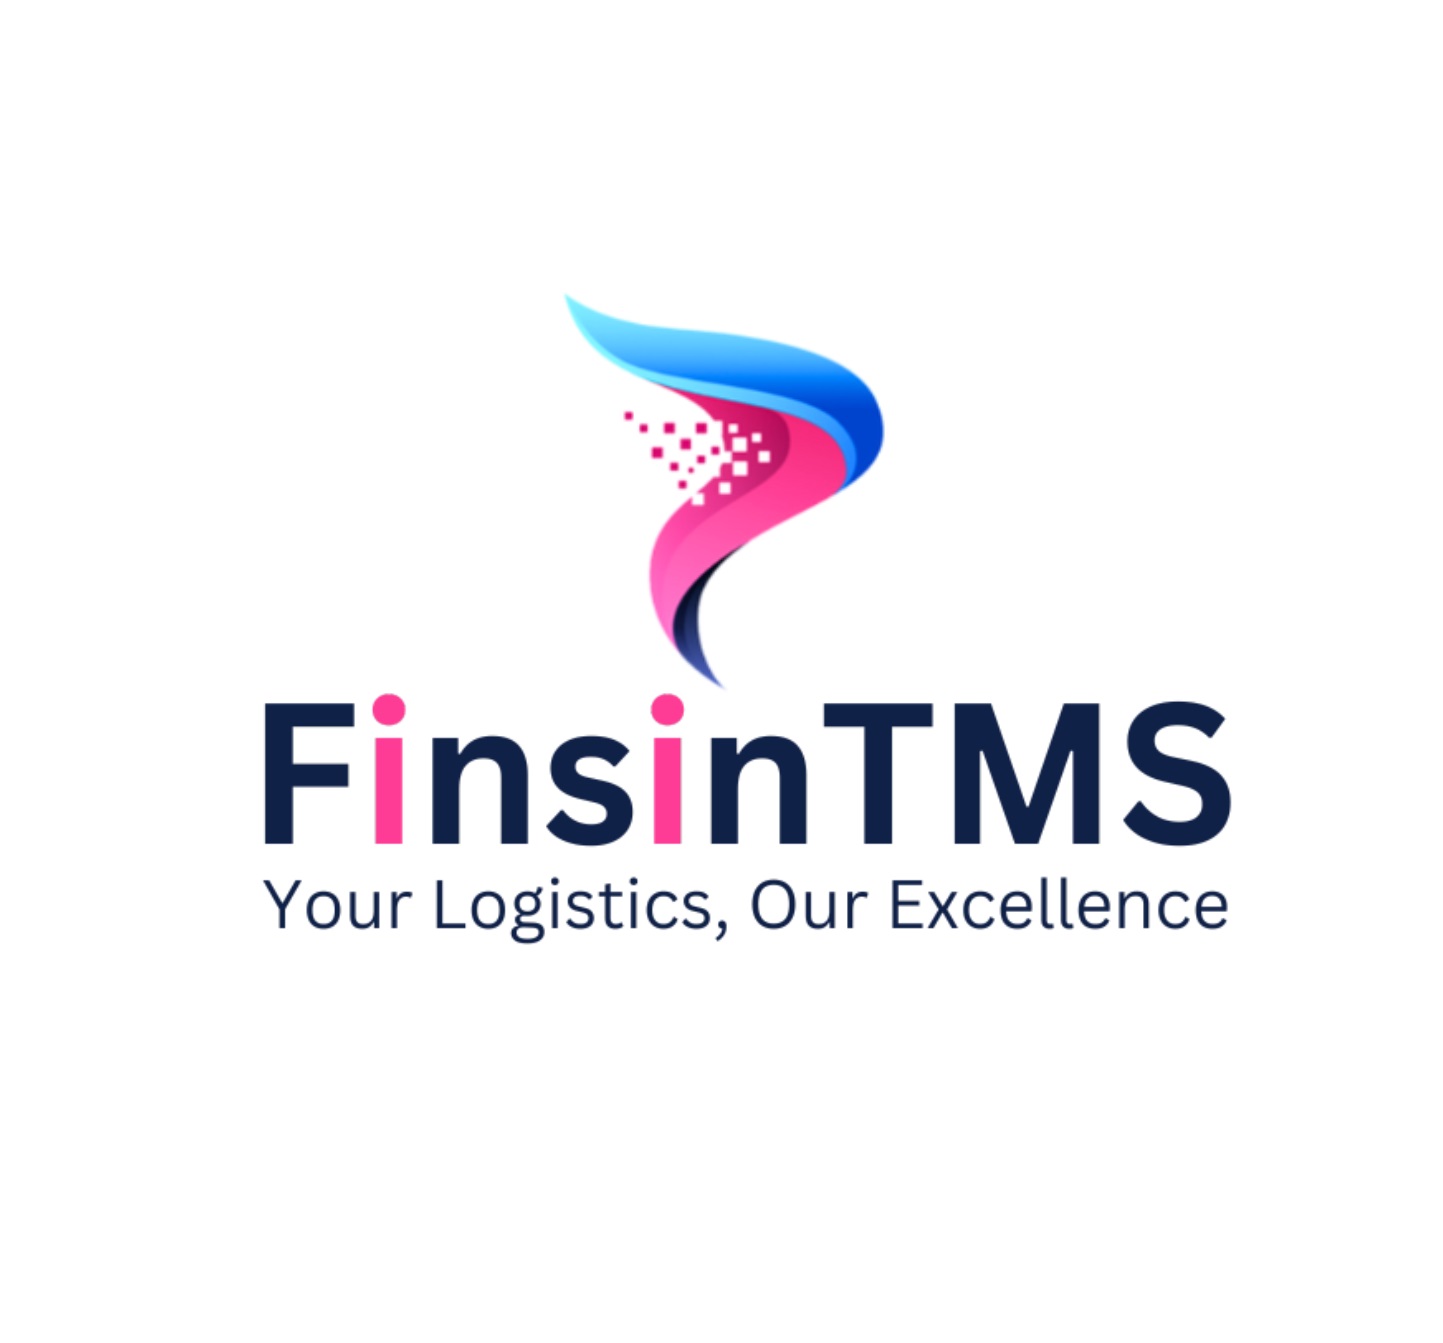 Business logo of FinsinTMS